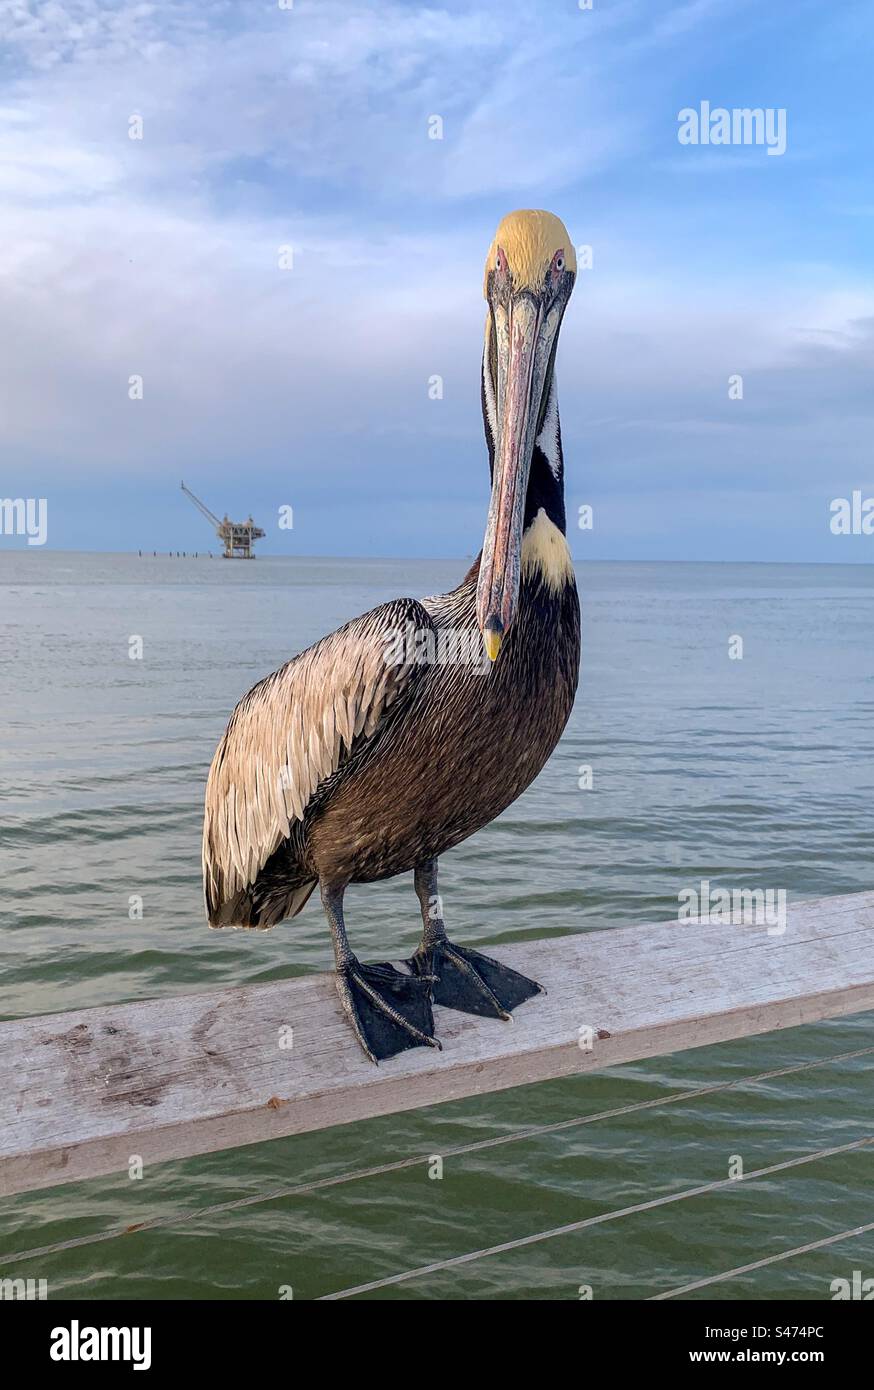 Pelican on the Gulf Coast Stock Photo